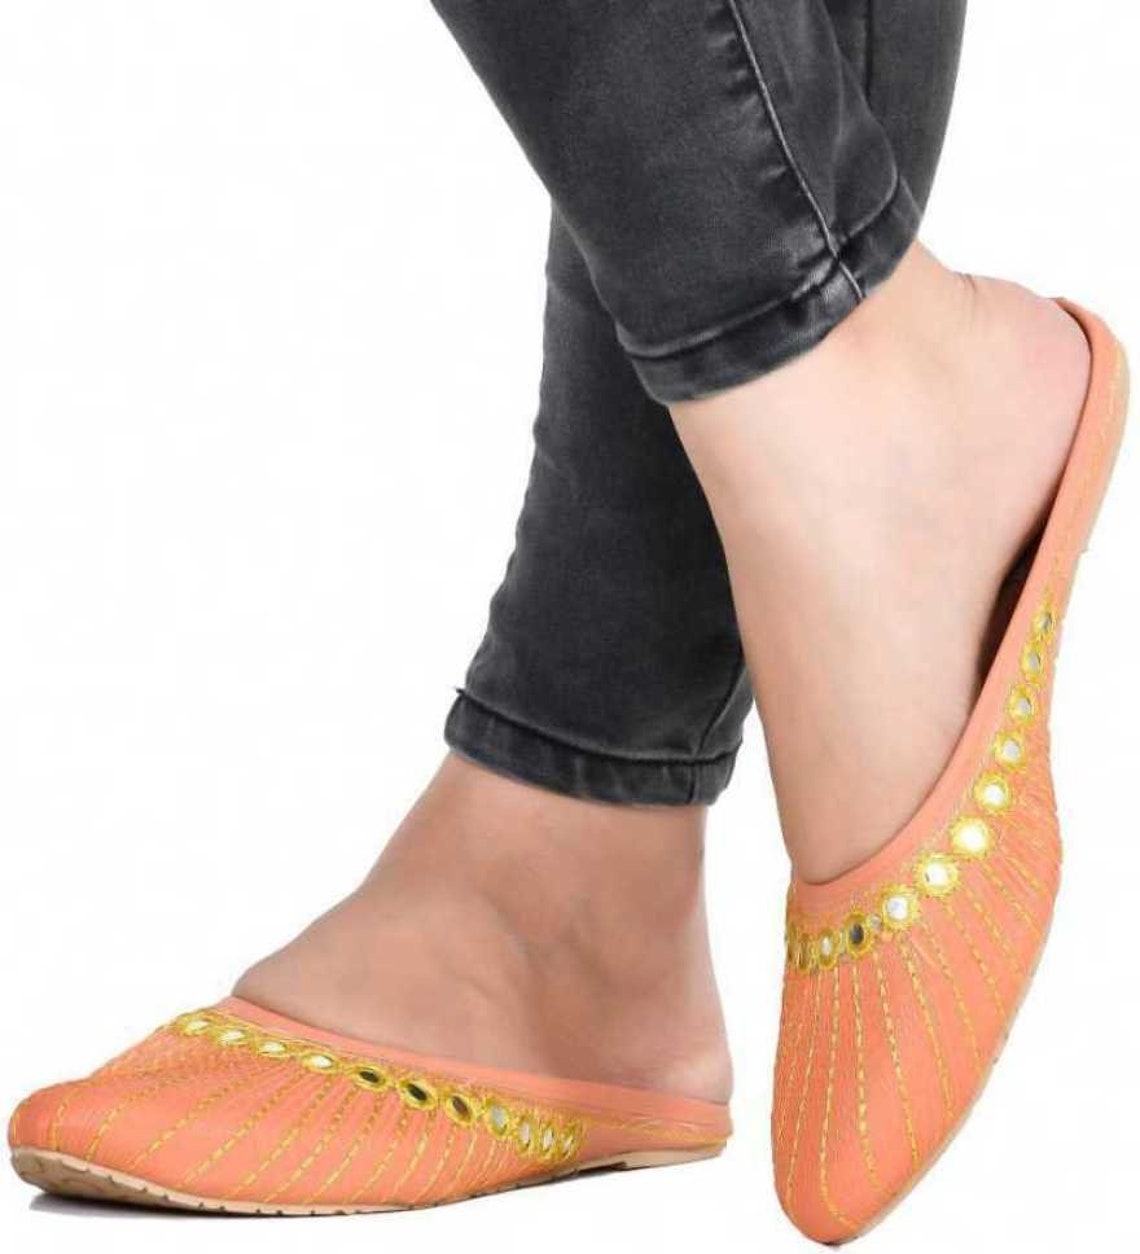 Girls new style punjabi Jutti ladies Jutti Shoes Punjabi Shoes | Etsy